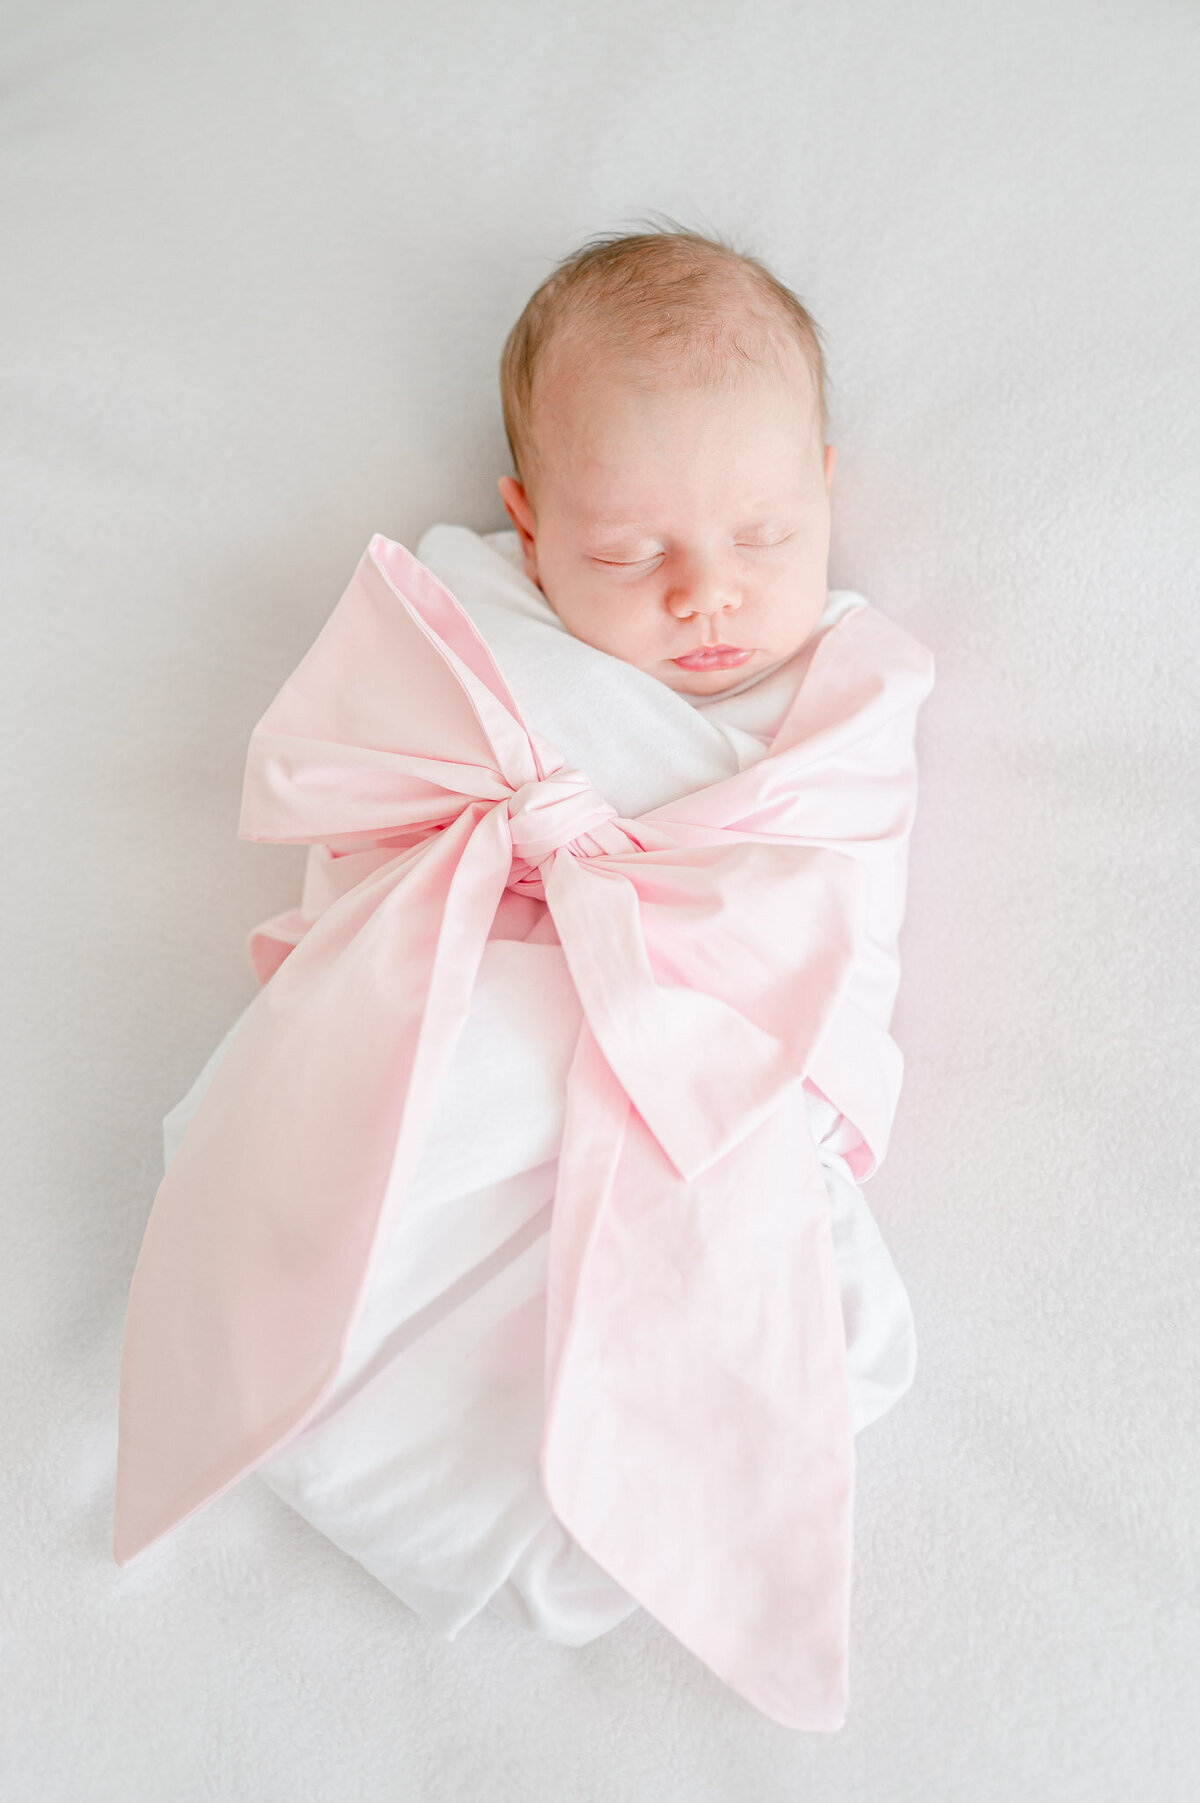 Baby girl is swaddled in a Beaufort Bonnet swaddle bow in Nashville newborn photographer Kristie Lloyd's studio